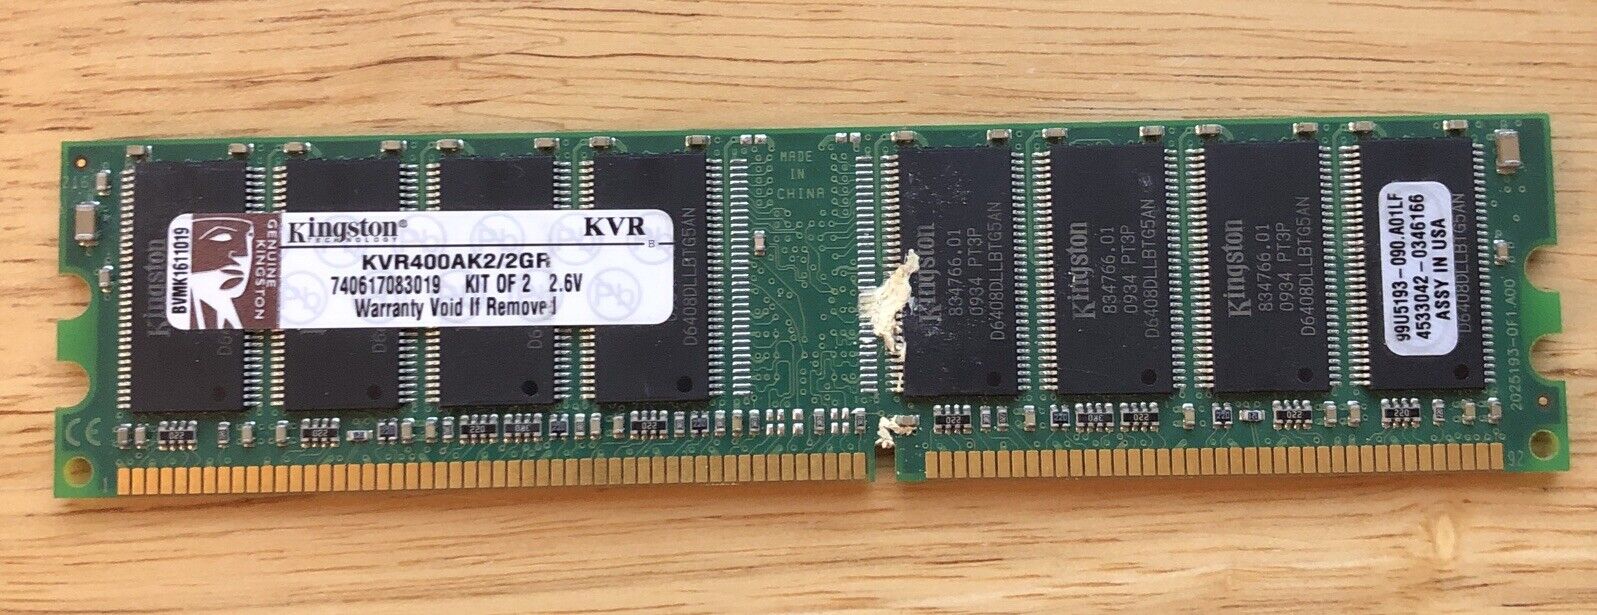 Genuine Kingston 2GB Kit Value RAM KVR400AK2/2GR